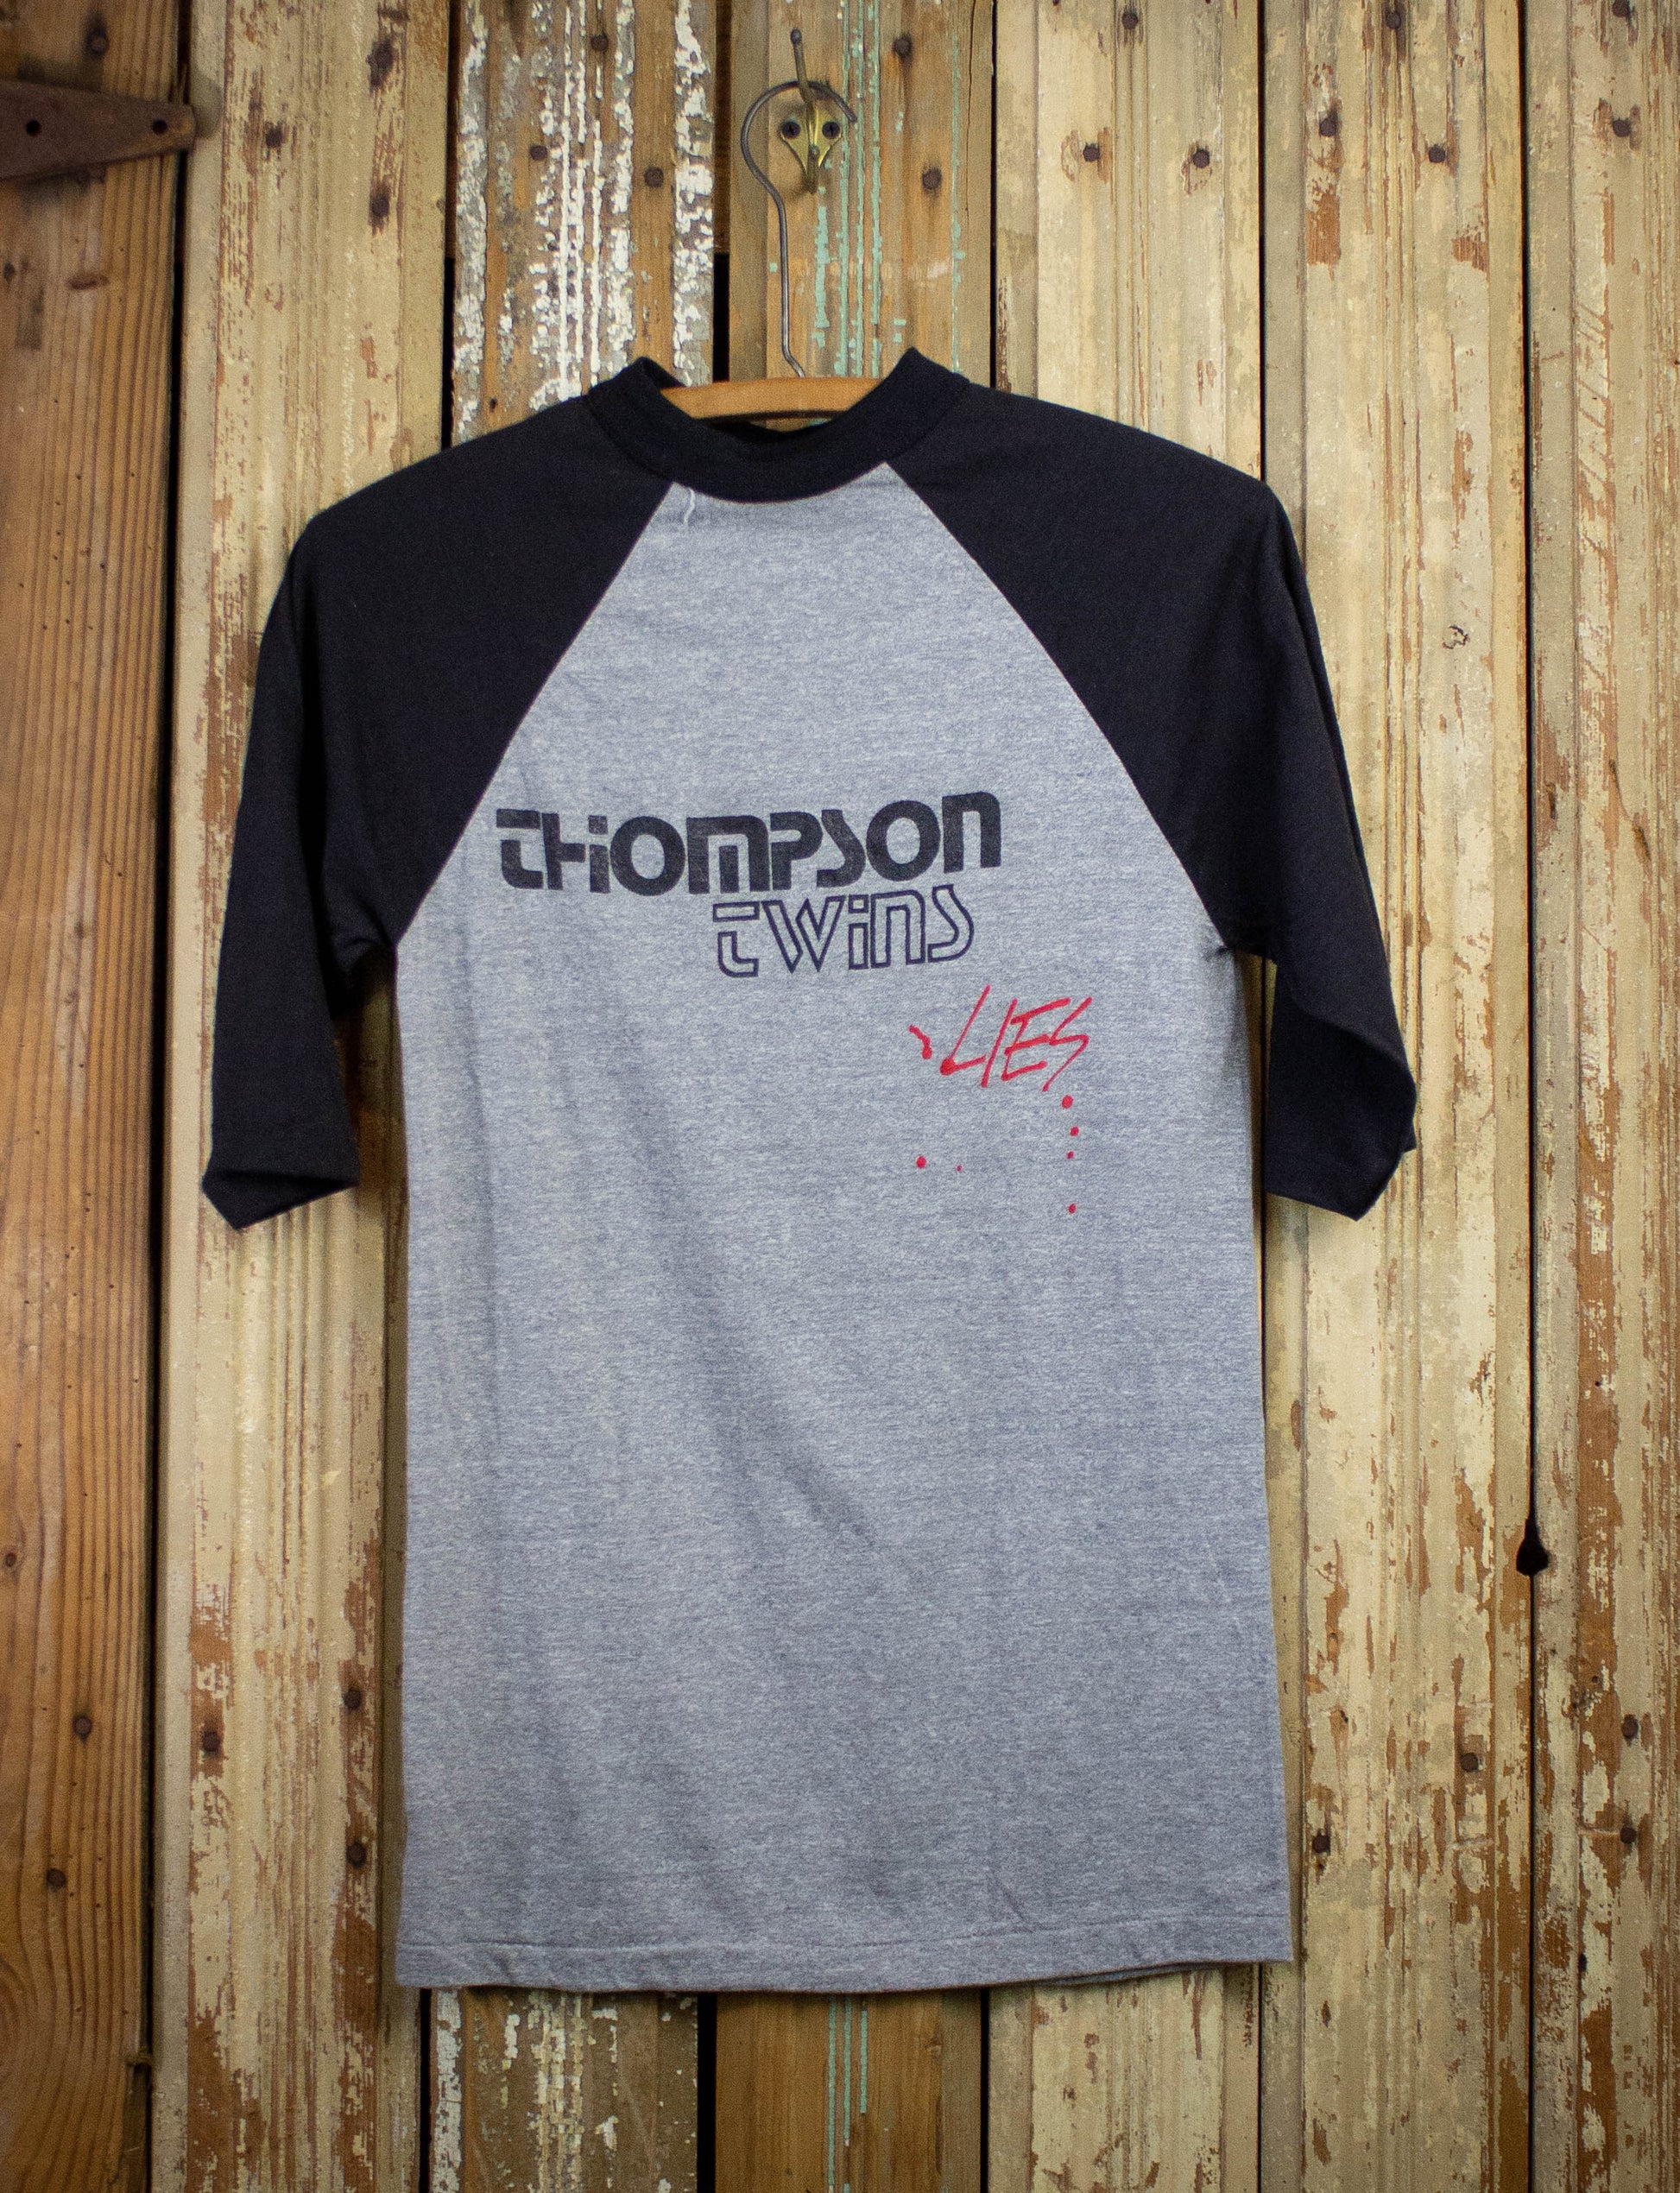 Vintage Thompson Twins Lies Raglan Concert T Shirt 80s Gray and Black Small